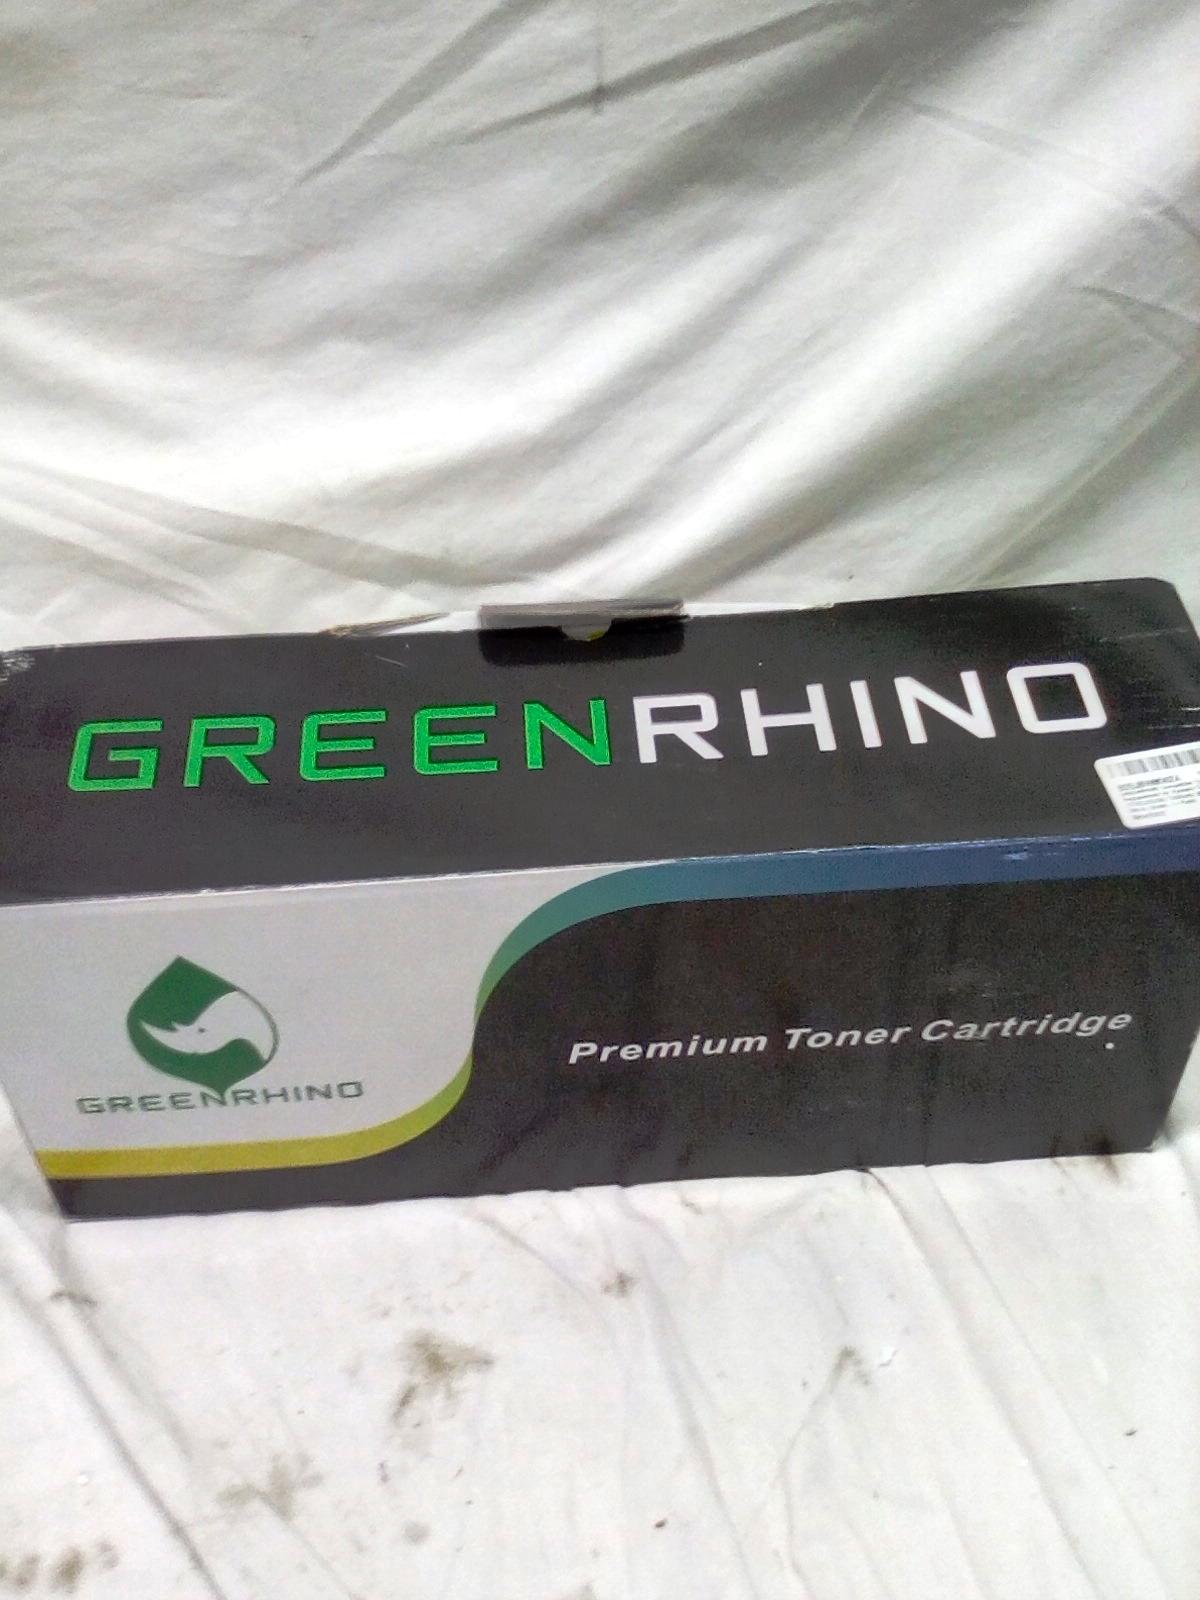 Green Rhino Premium Toner Cartridge see label in pic 2